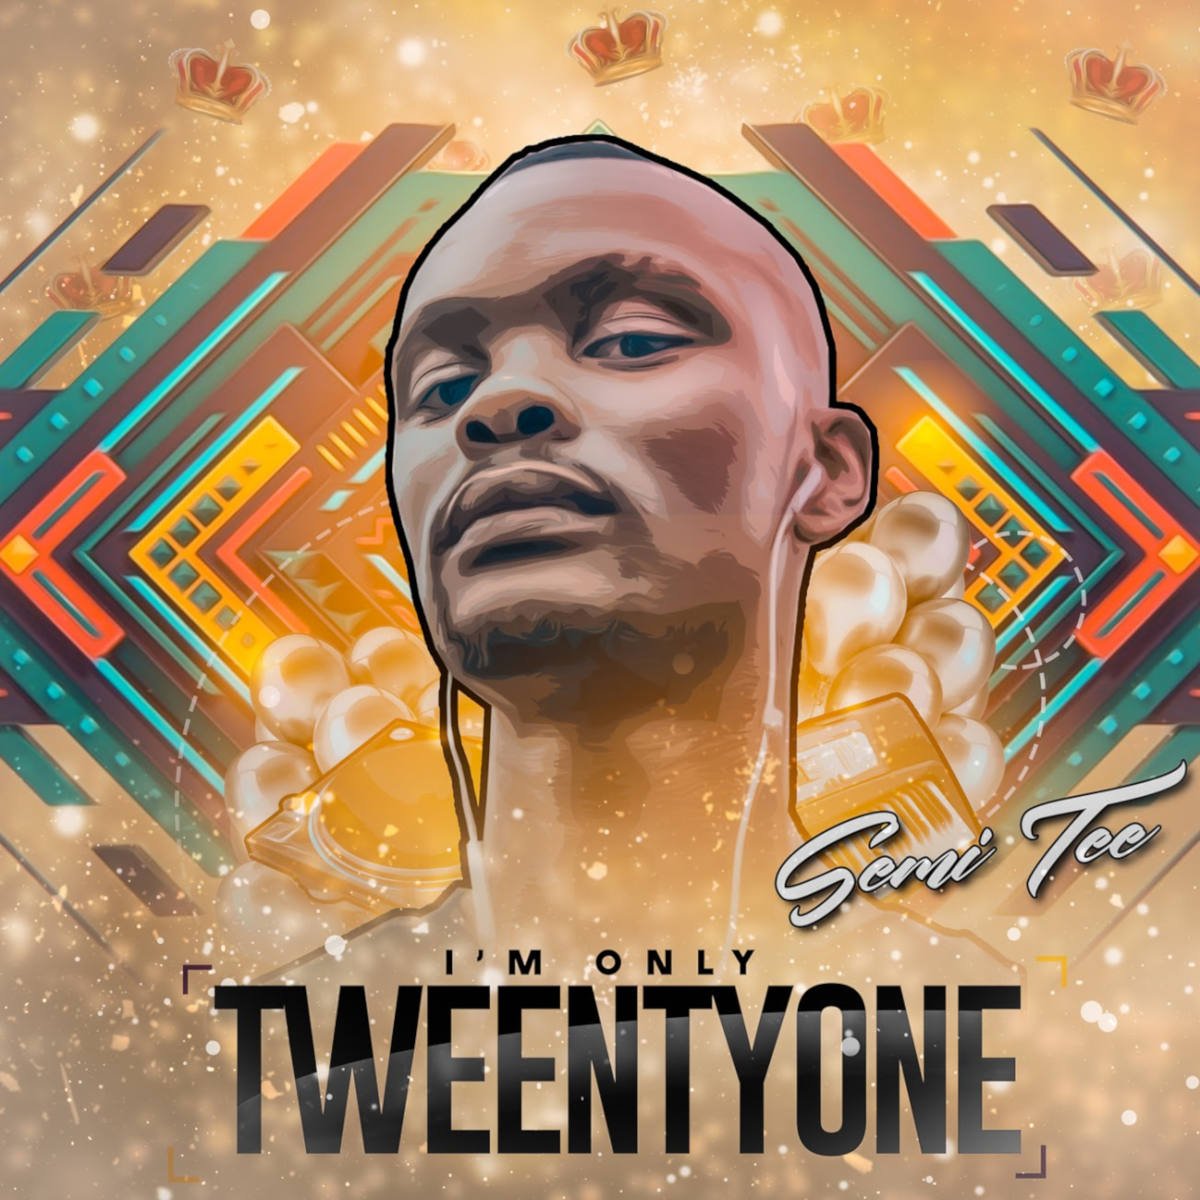 Semi Tee - I’m Only TweentyOne (Album)